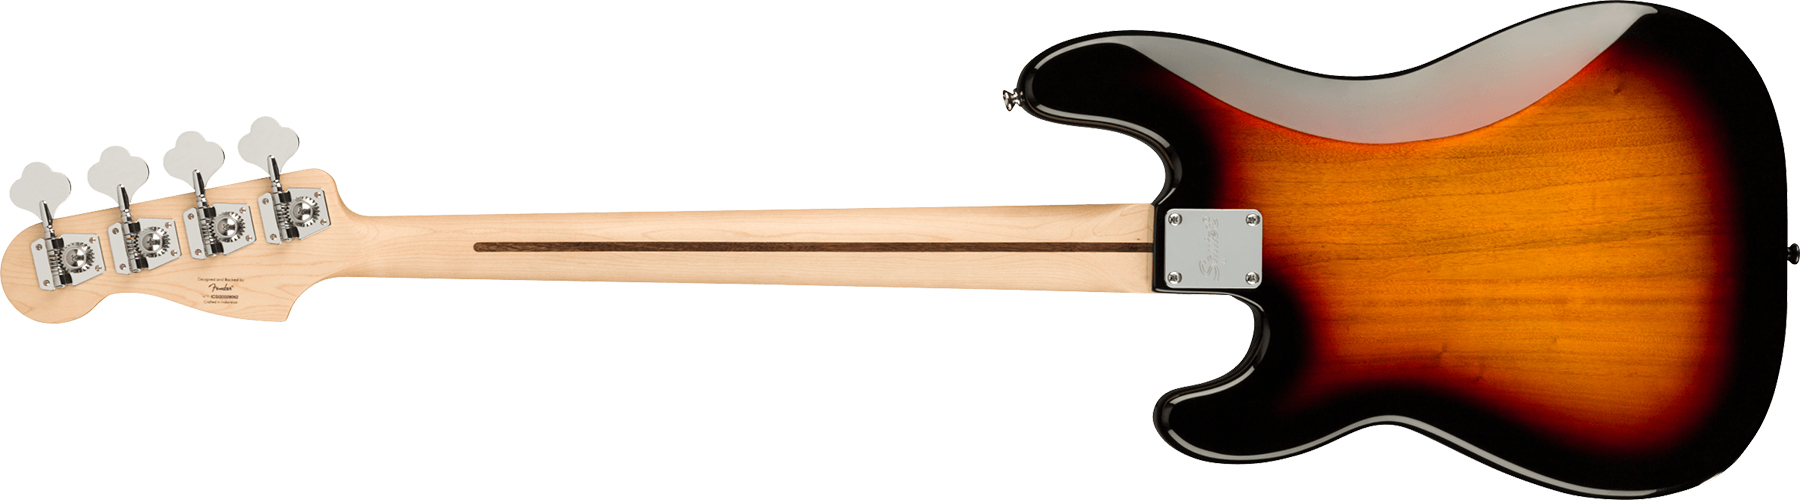 Squier Precision Bass Pj Affinity Pack +fender Rumble 15 V3 2021 Lau - 3-color Sunburst - Pack bajo eléctrico - Variation 2